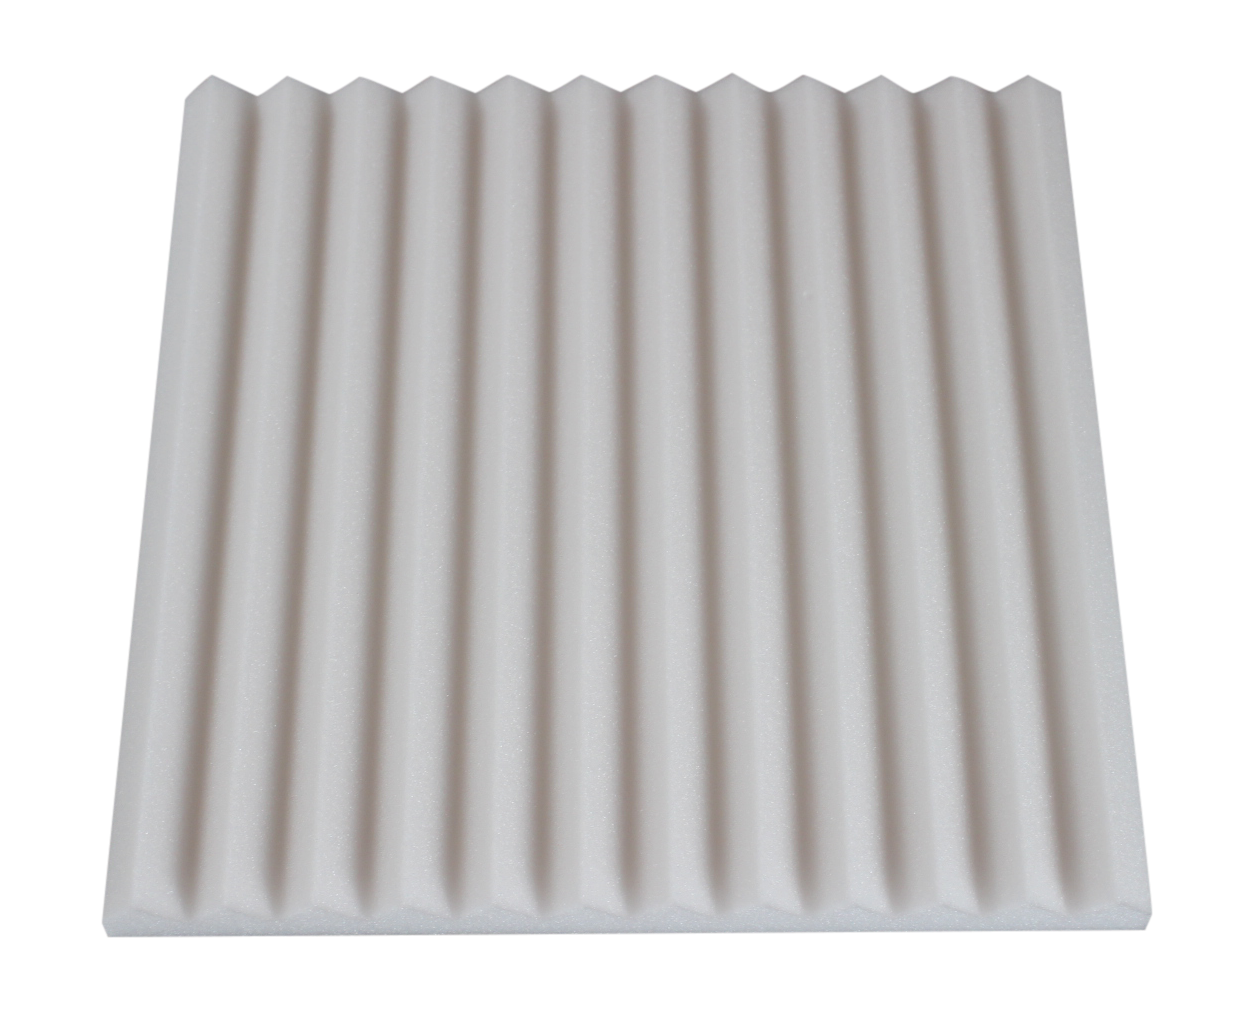 SoundAssured White Acoustic Foam 2x12x12 inch Panels - 4 Pack